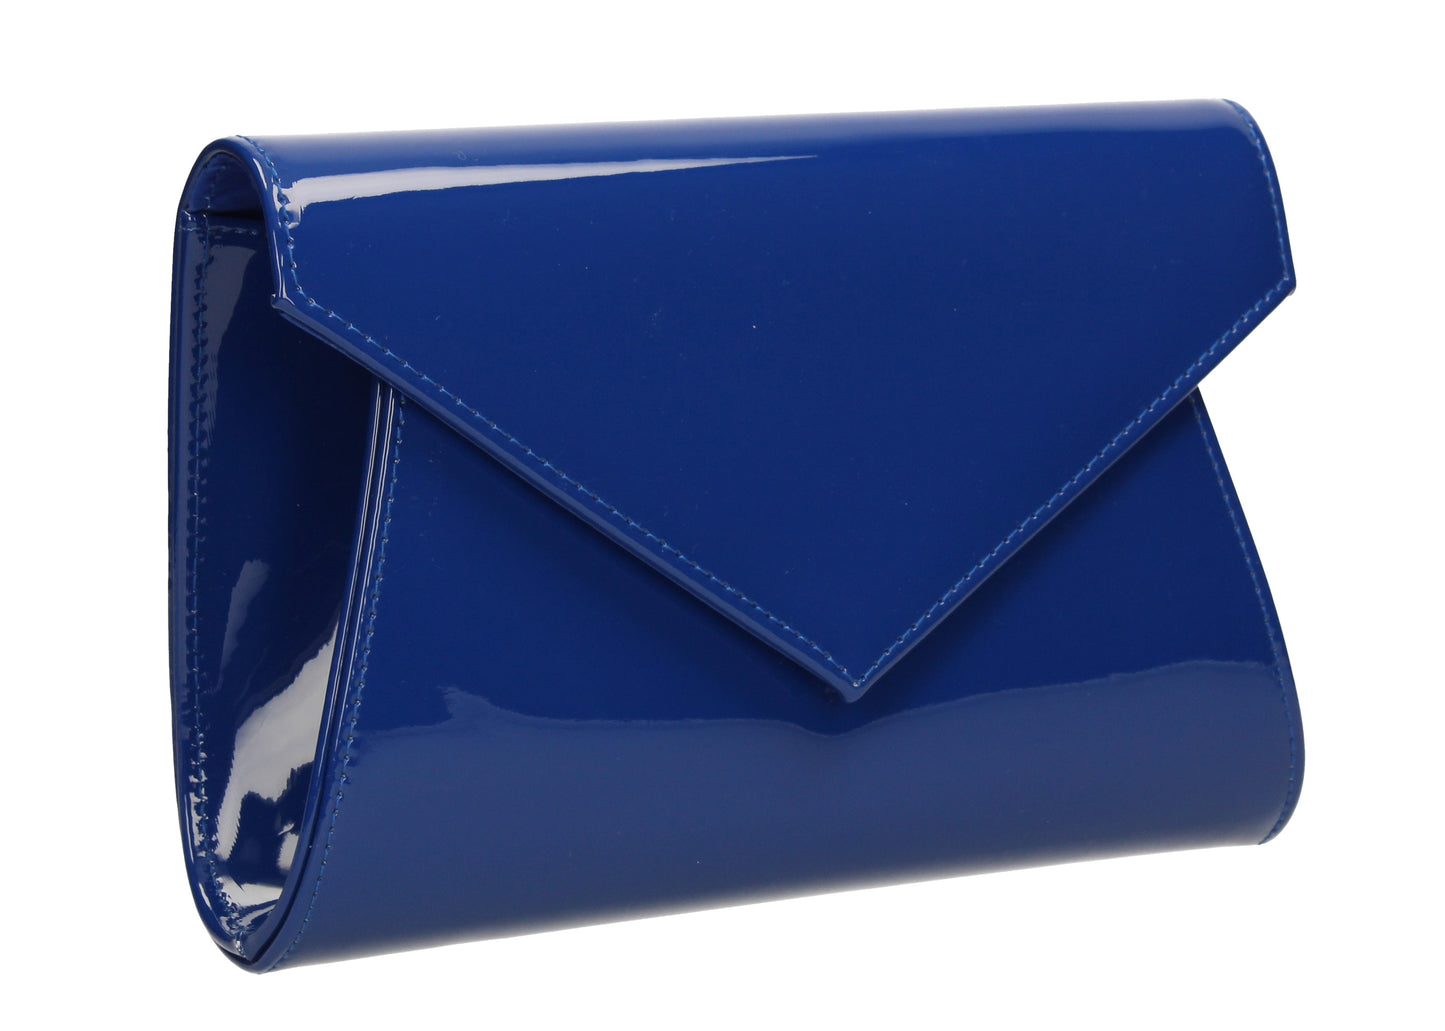 SWANKYSWANS Chrissy Envelope Clutch Bag Royal Blue Cute Cheap Clutch Bag For Weddings School and Work